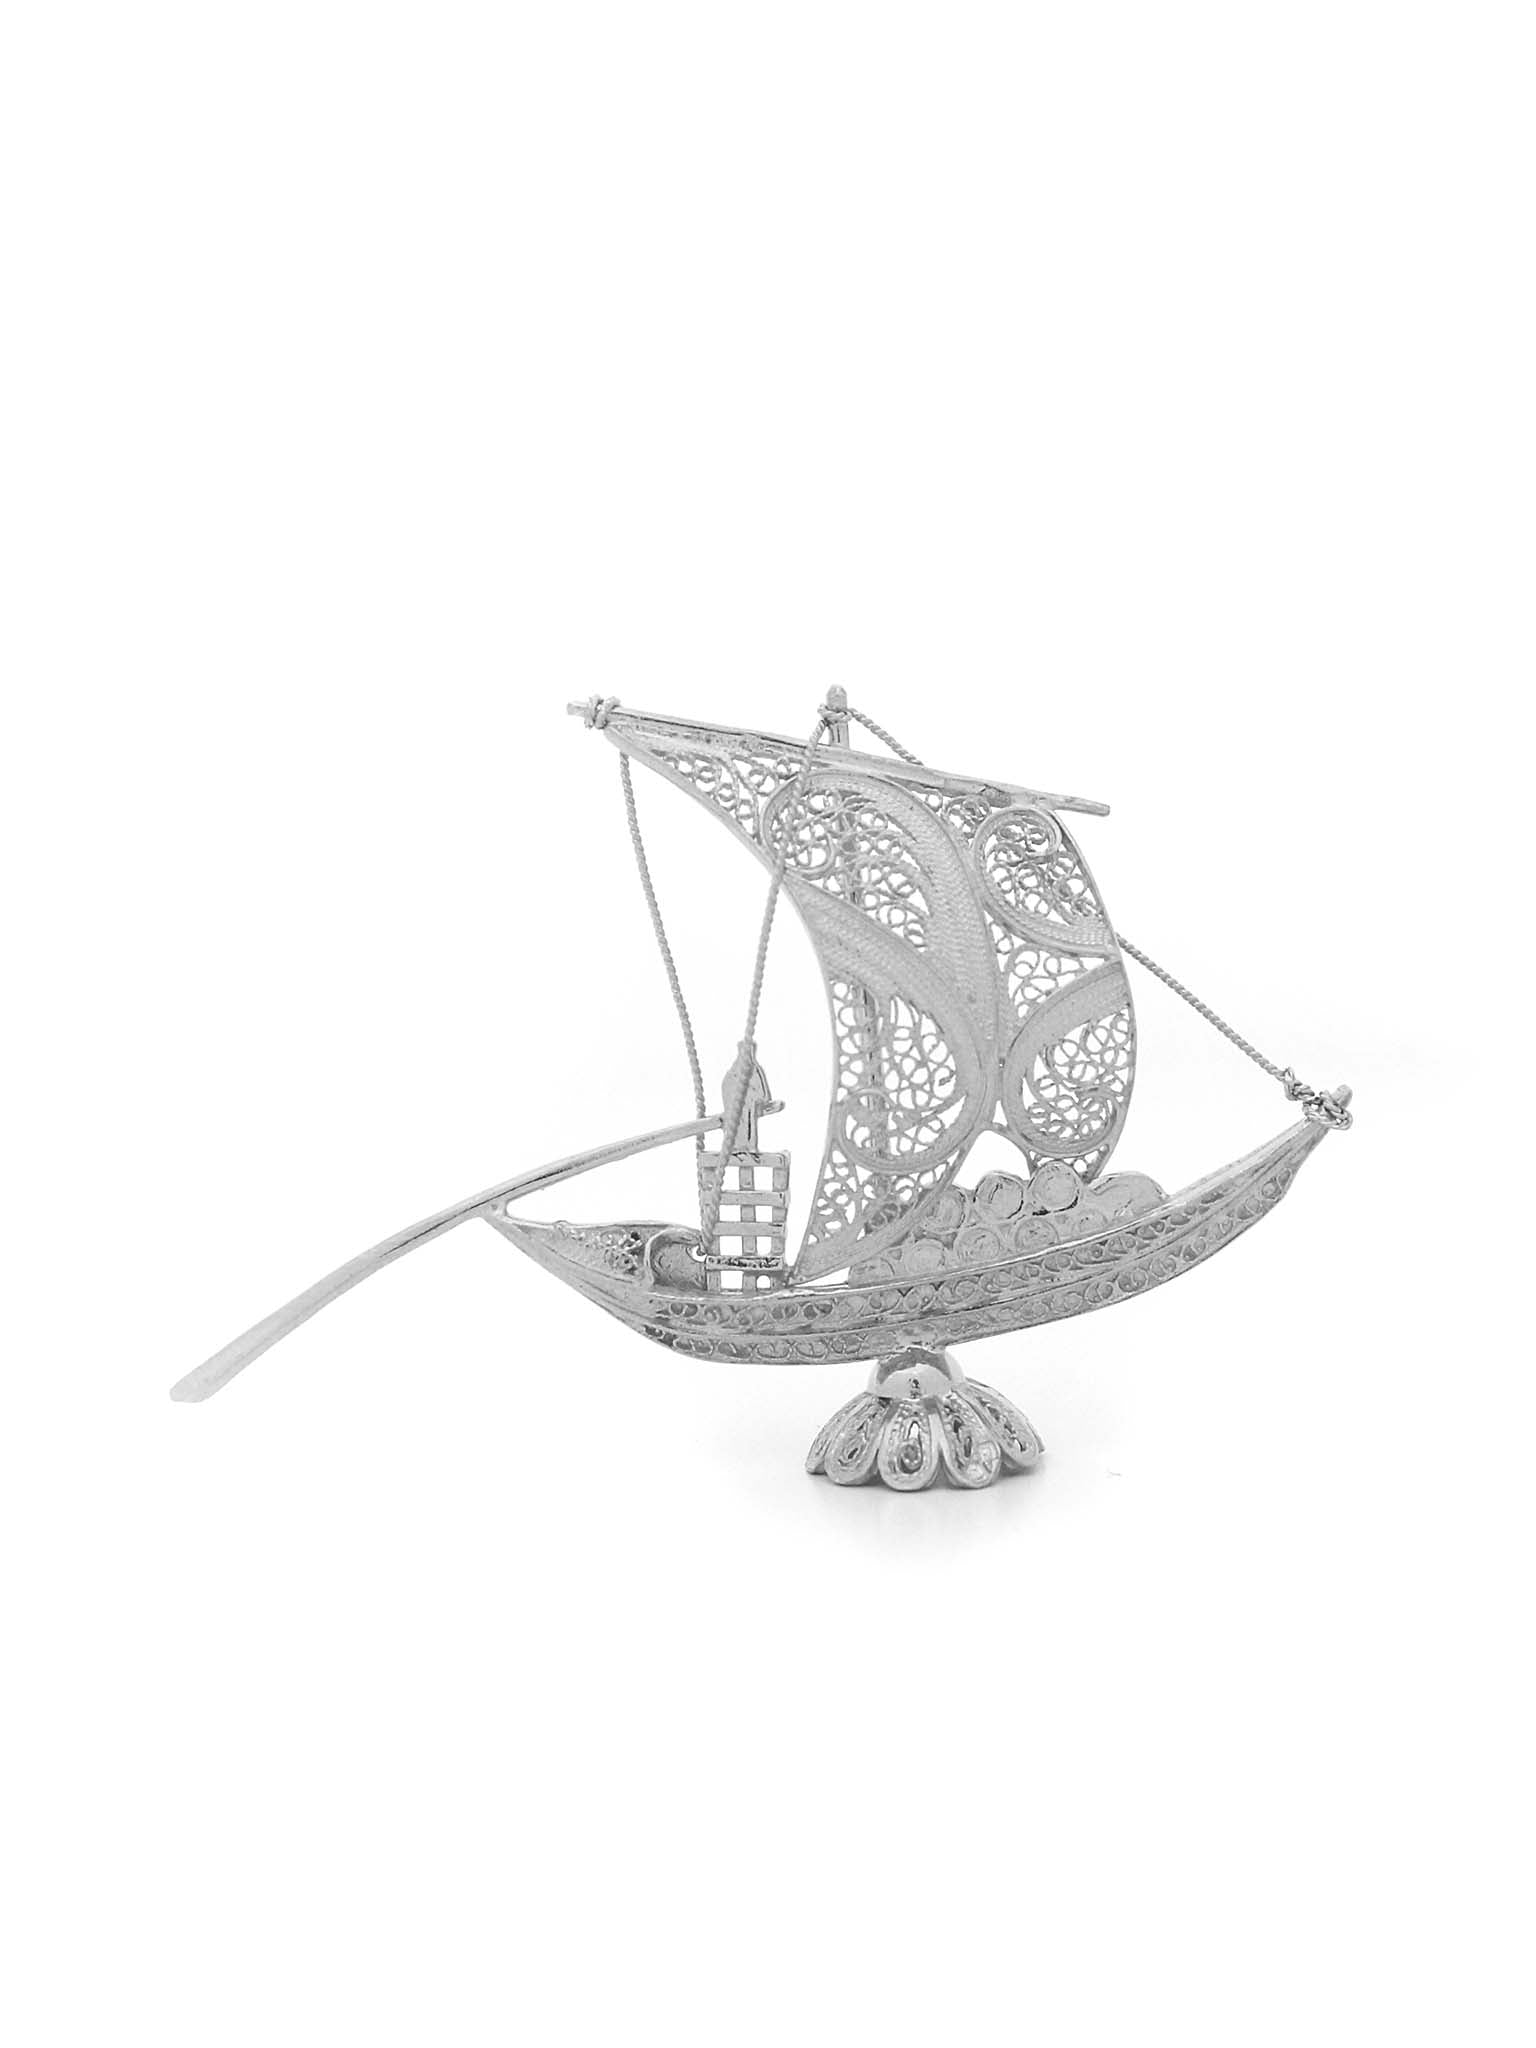 Decoration Piece - Rabelo Boat